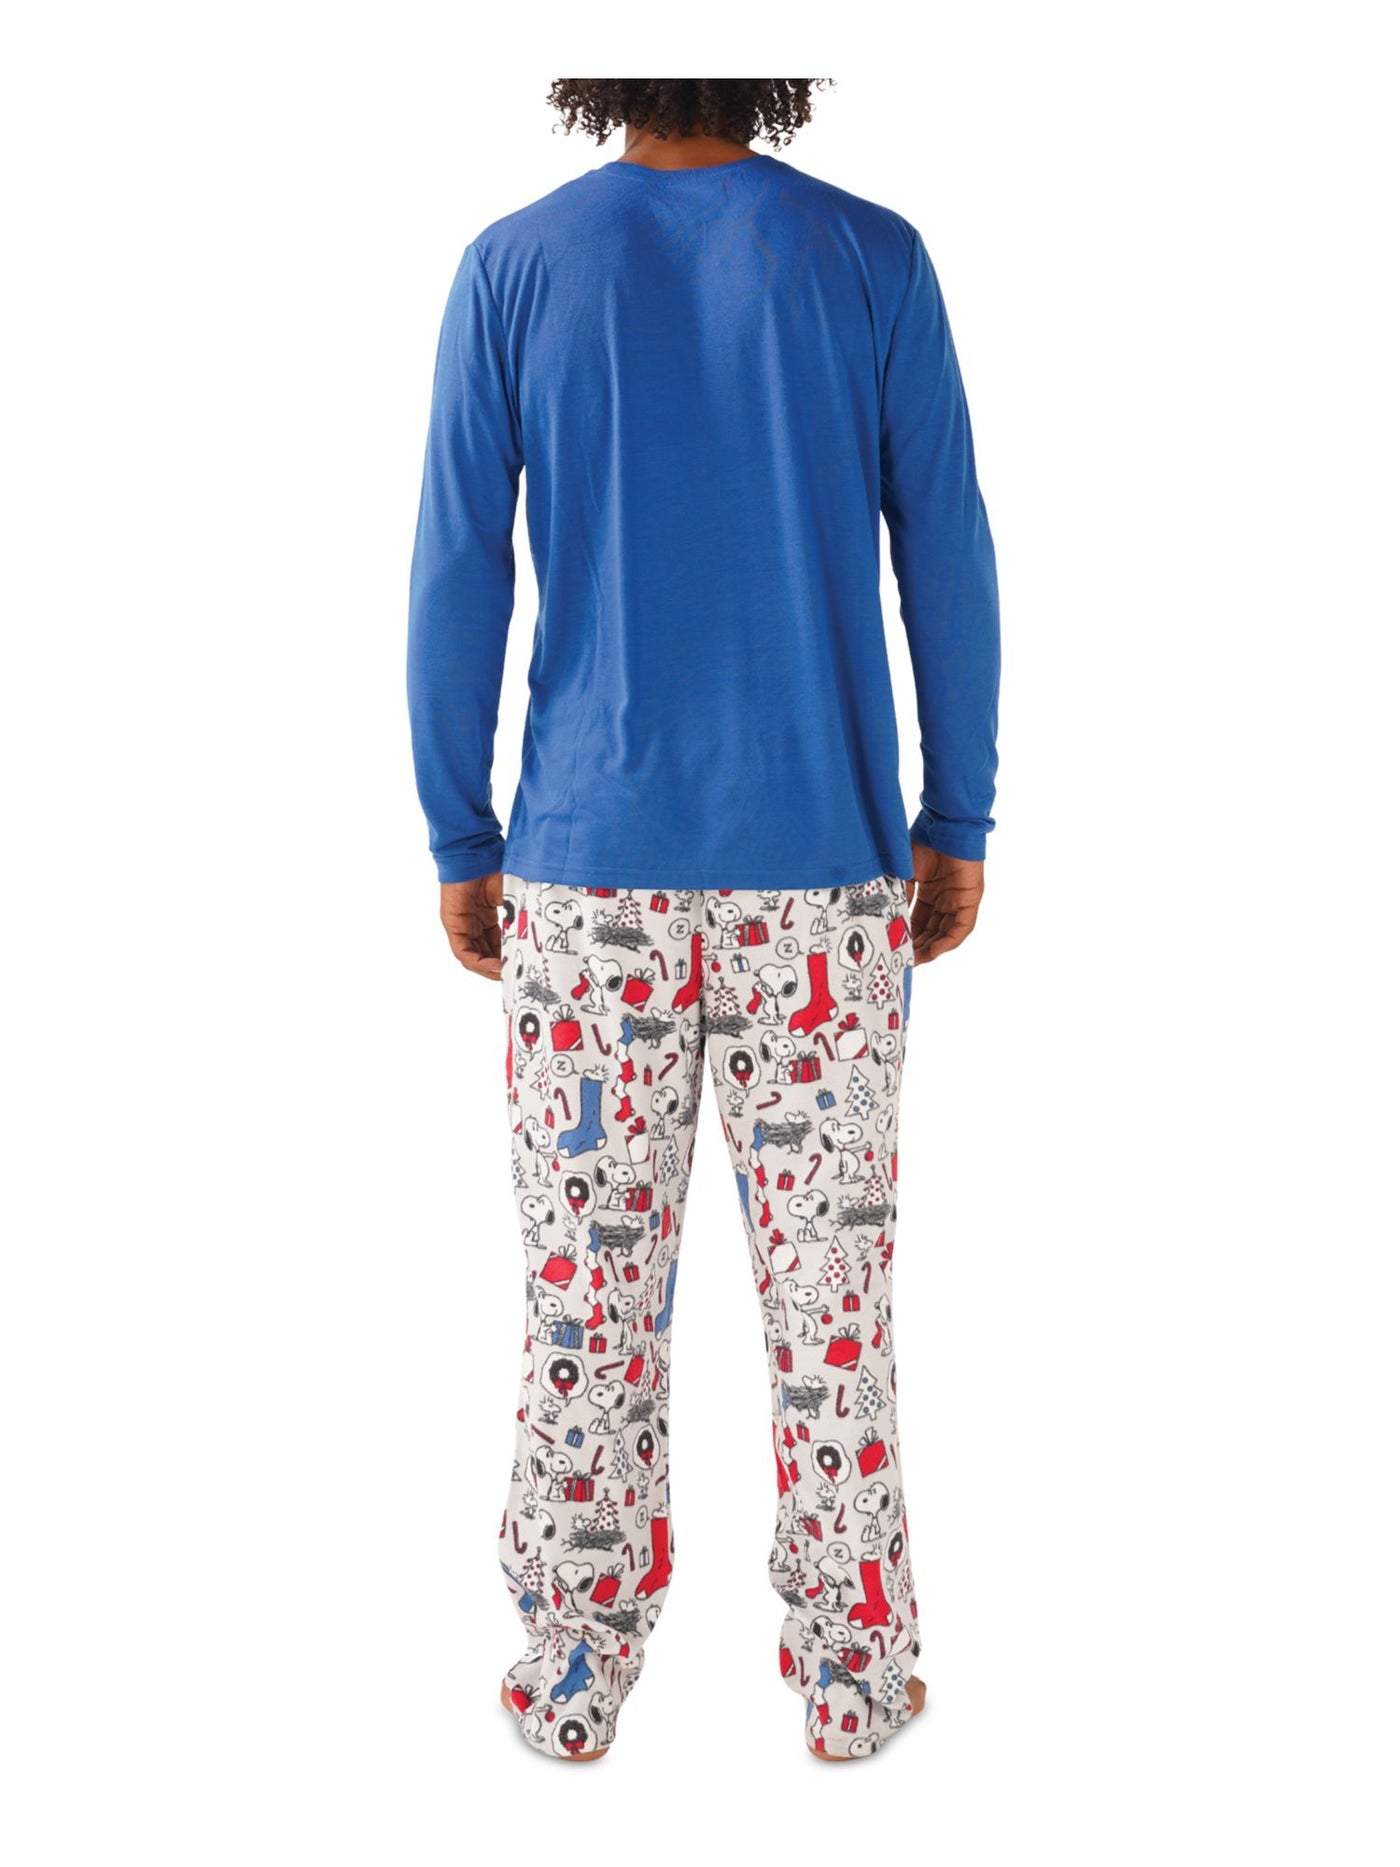 MUNKI MUNKI Mens Gray Graphic Top Elastic Band Long Sleeve Straight leg Pants Fleece Pajamas S